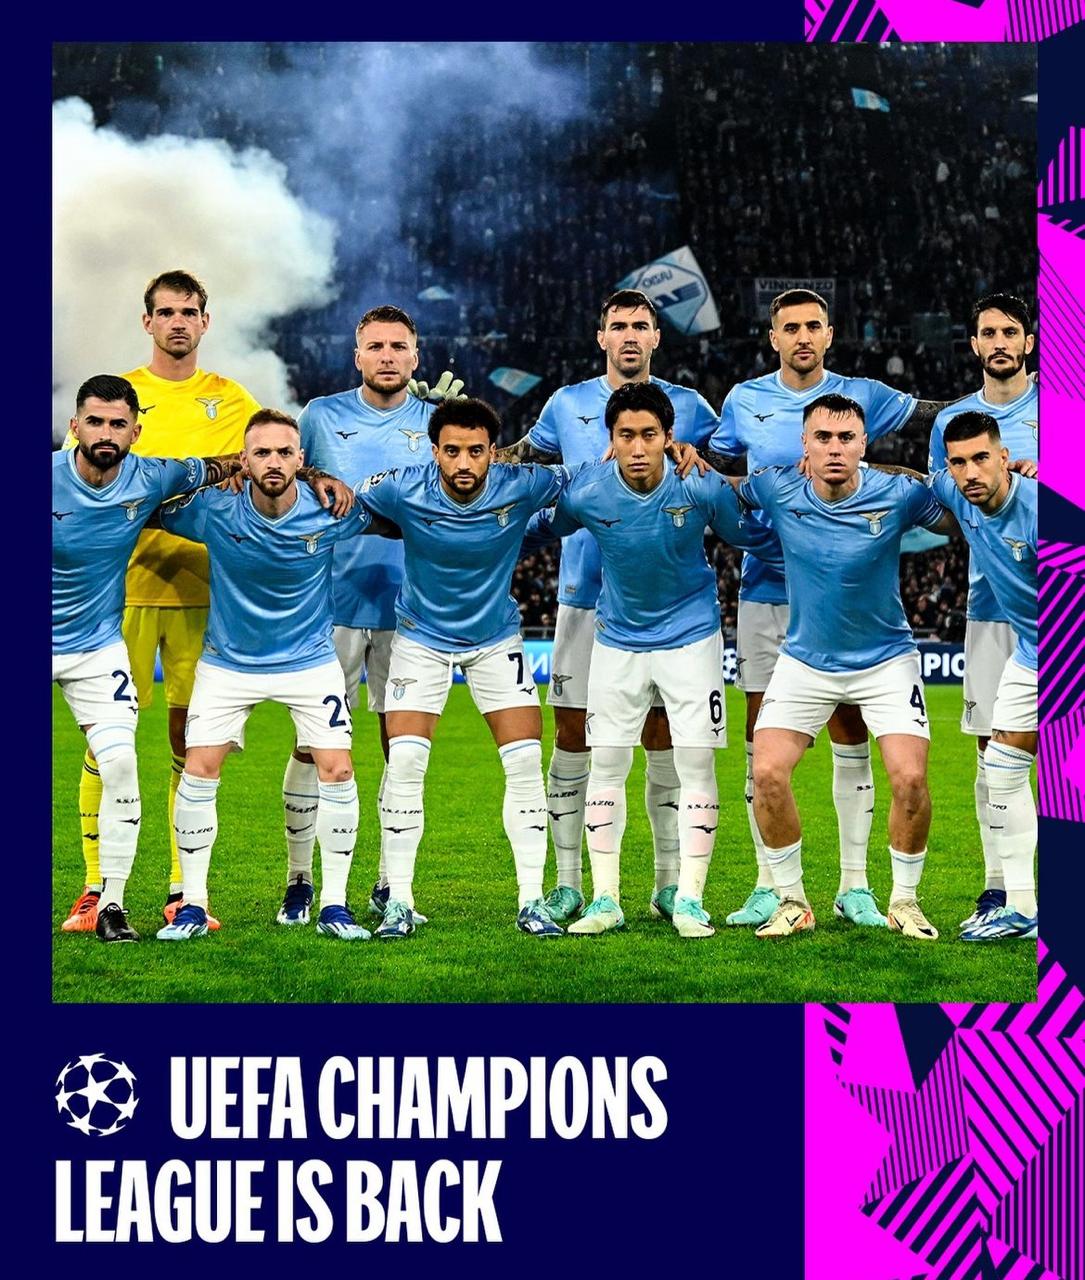 El Lazio da Inicio a la Jornada de Champions League